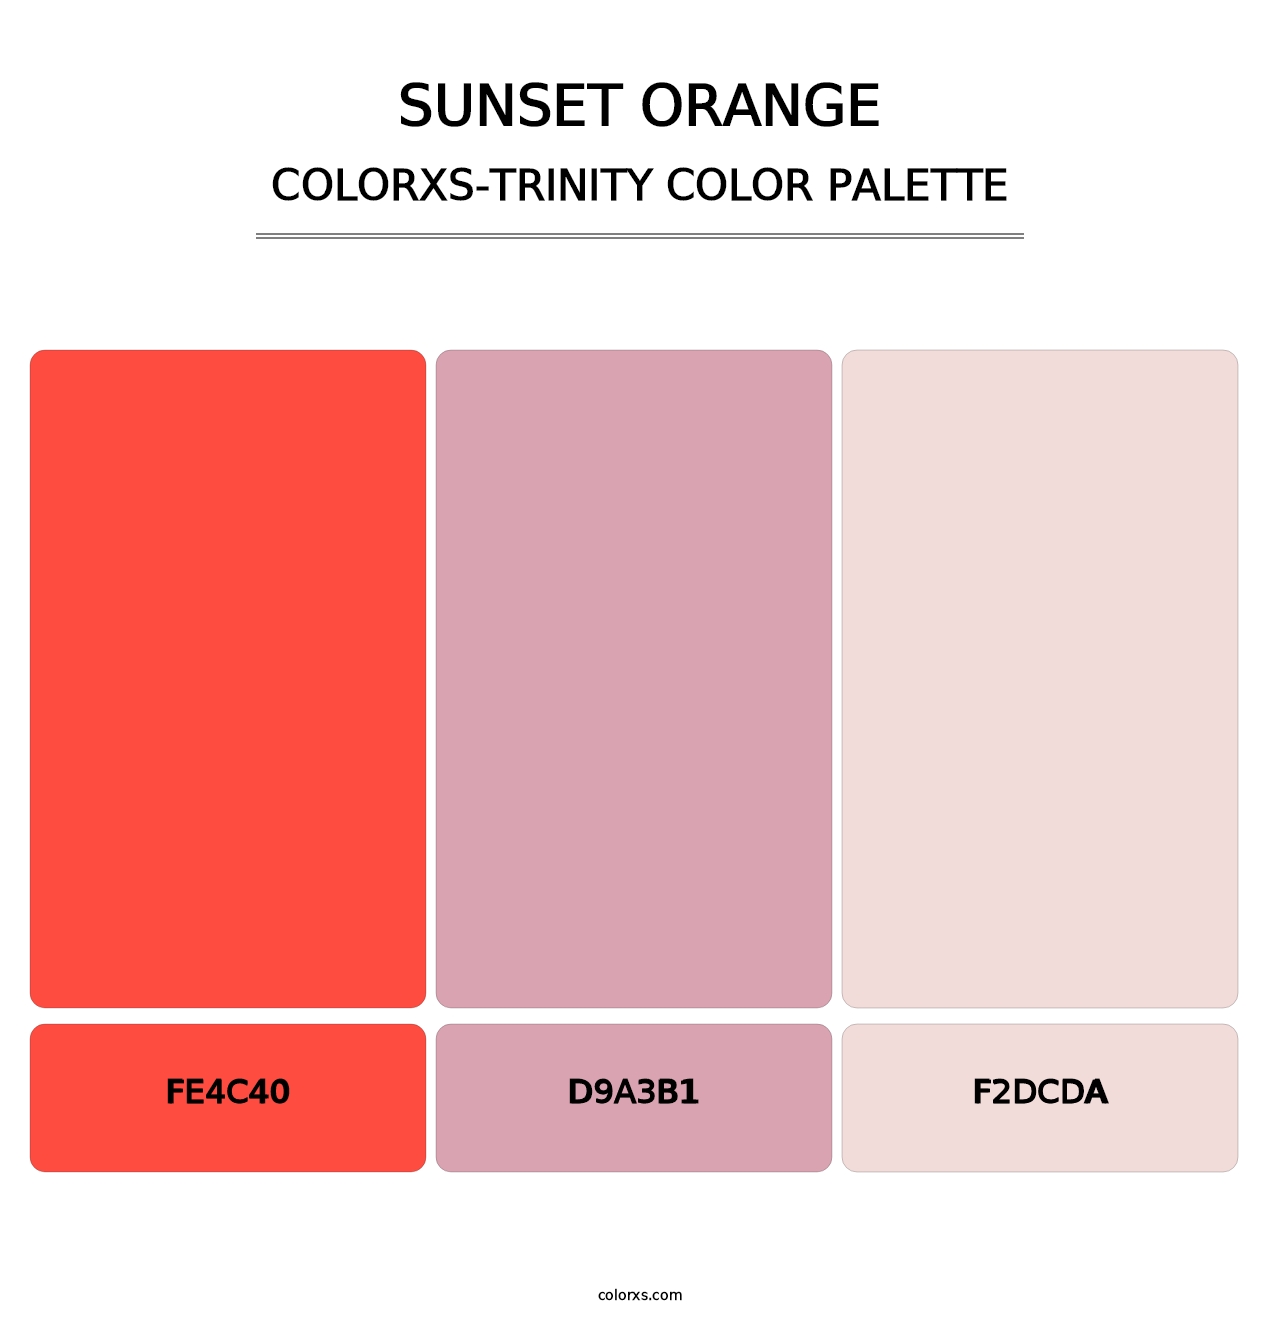 Sunset Orange - Colorxs Trinity Palette